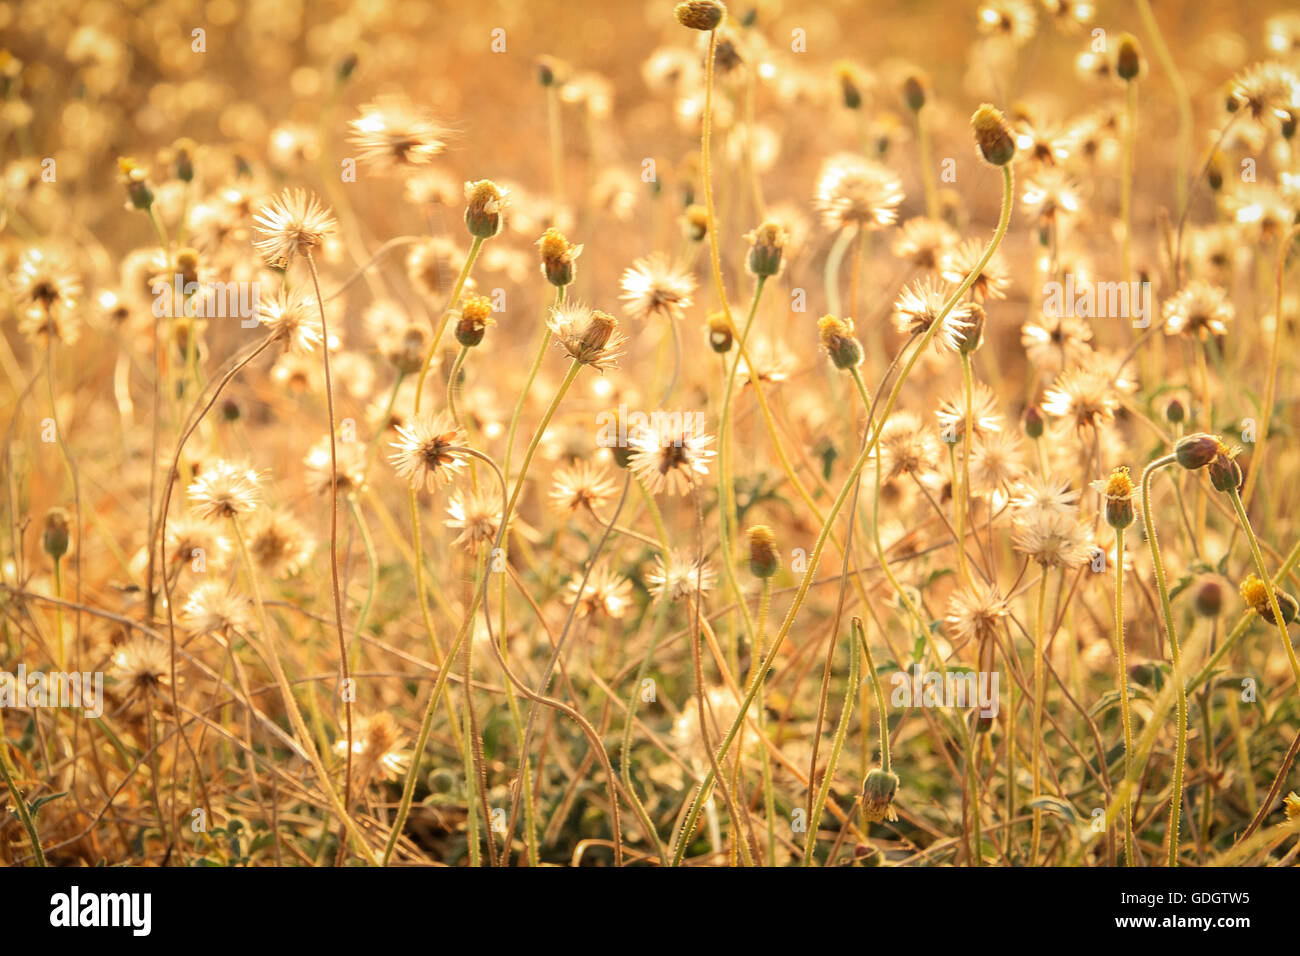 Tridox procumbens grass field with sunlight in the evening Stock Photo